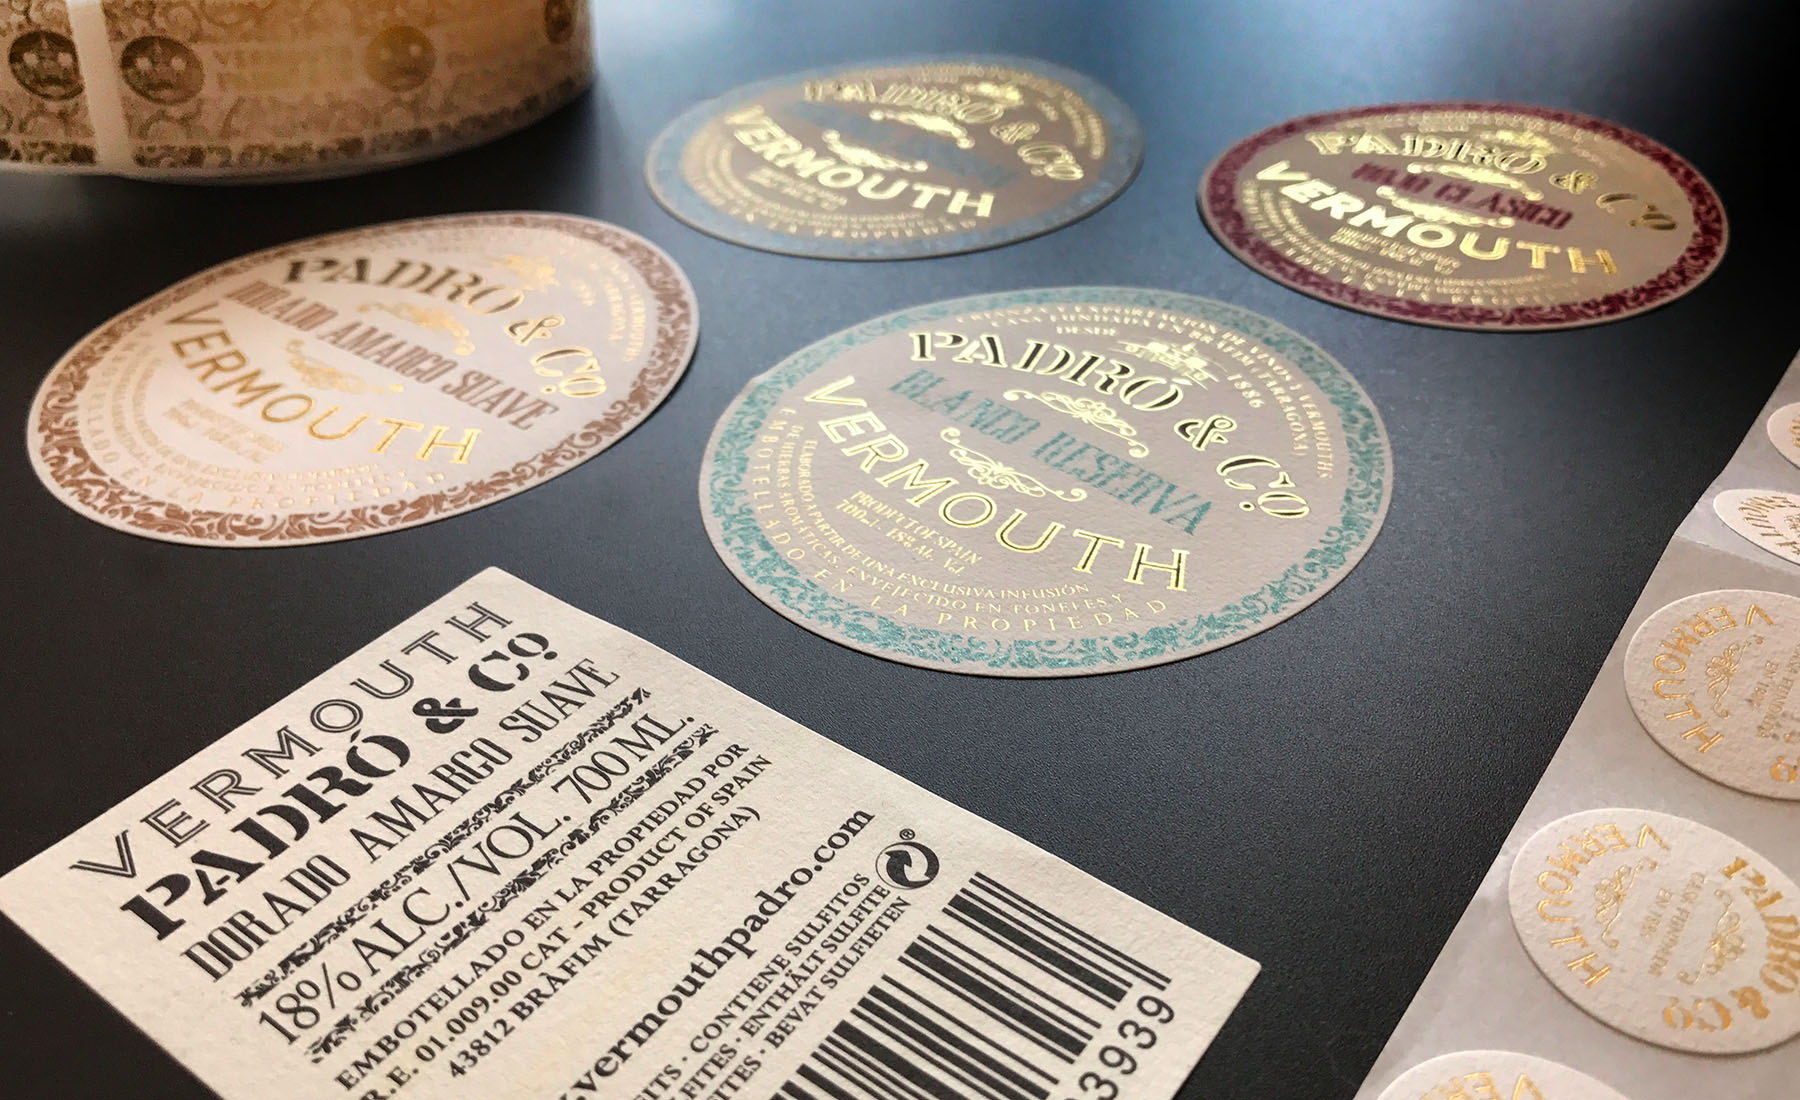 Vermouth Padró & Co.